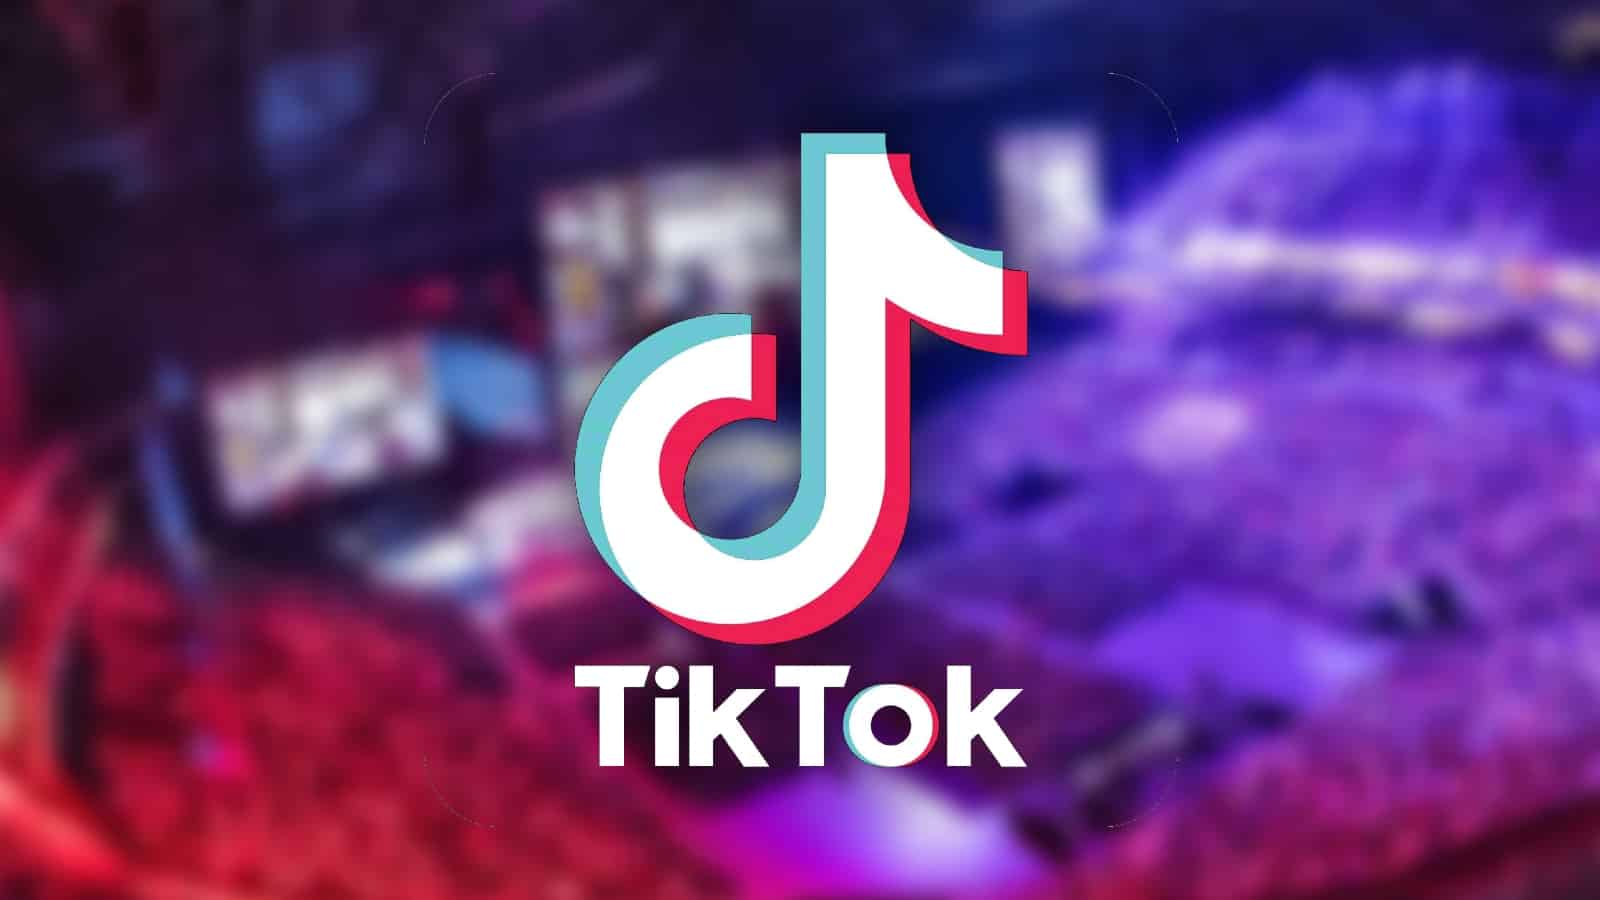 blurred esports tournament in background with tiktok logo on top